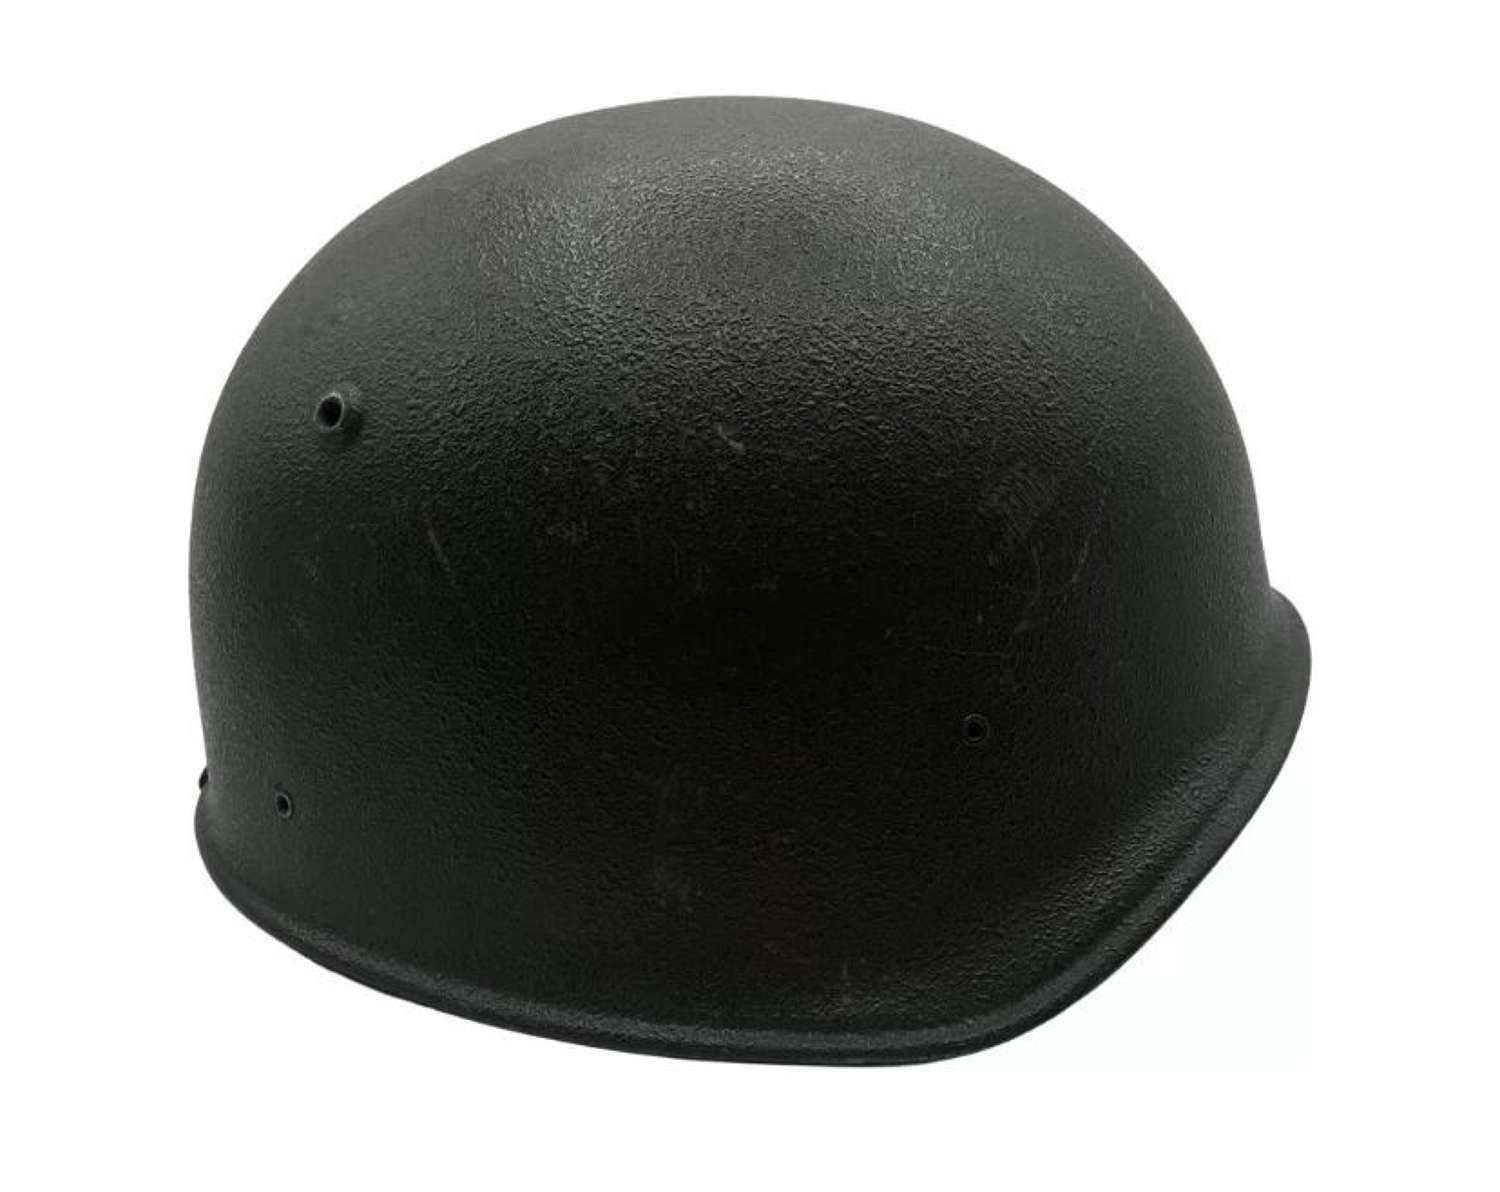 Post WW2 Swiss M1971 Steel Combat Helmet